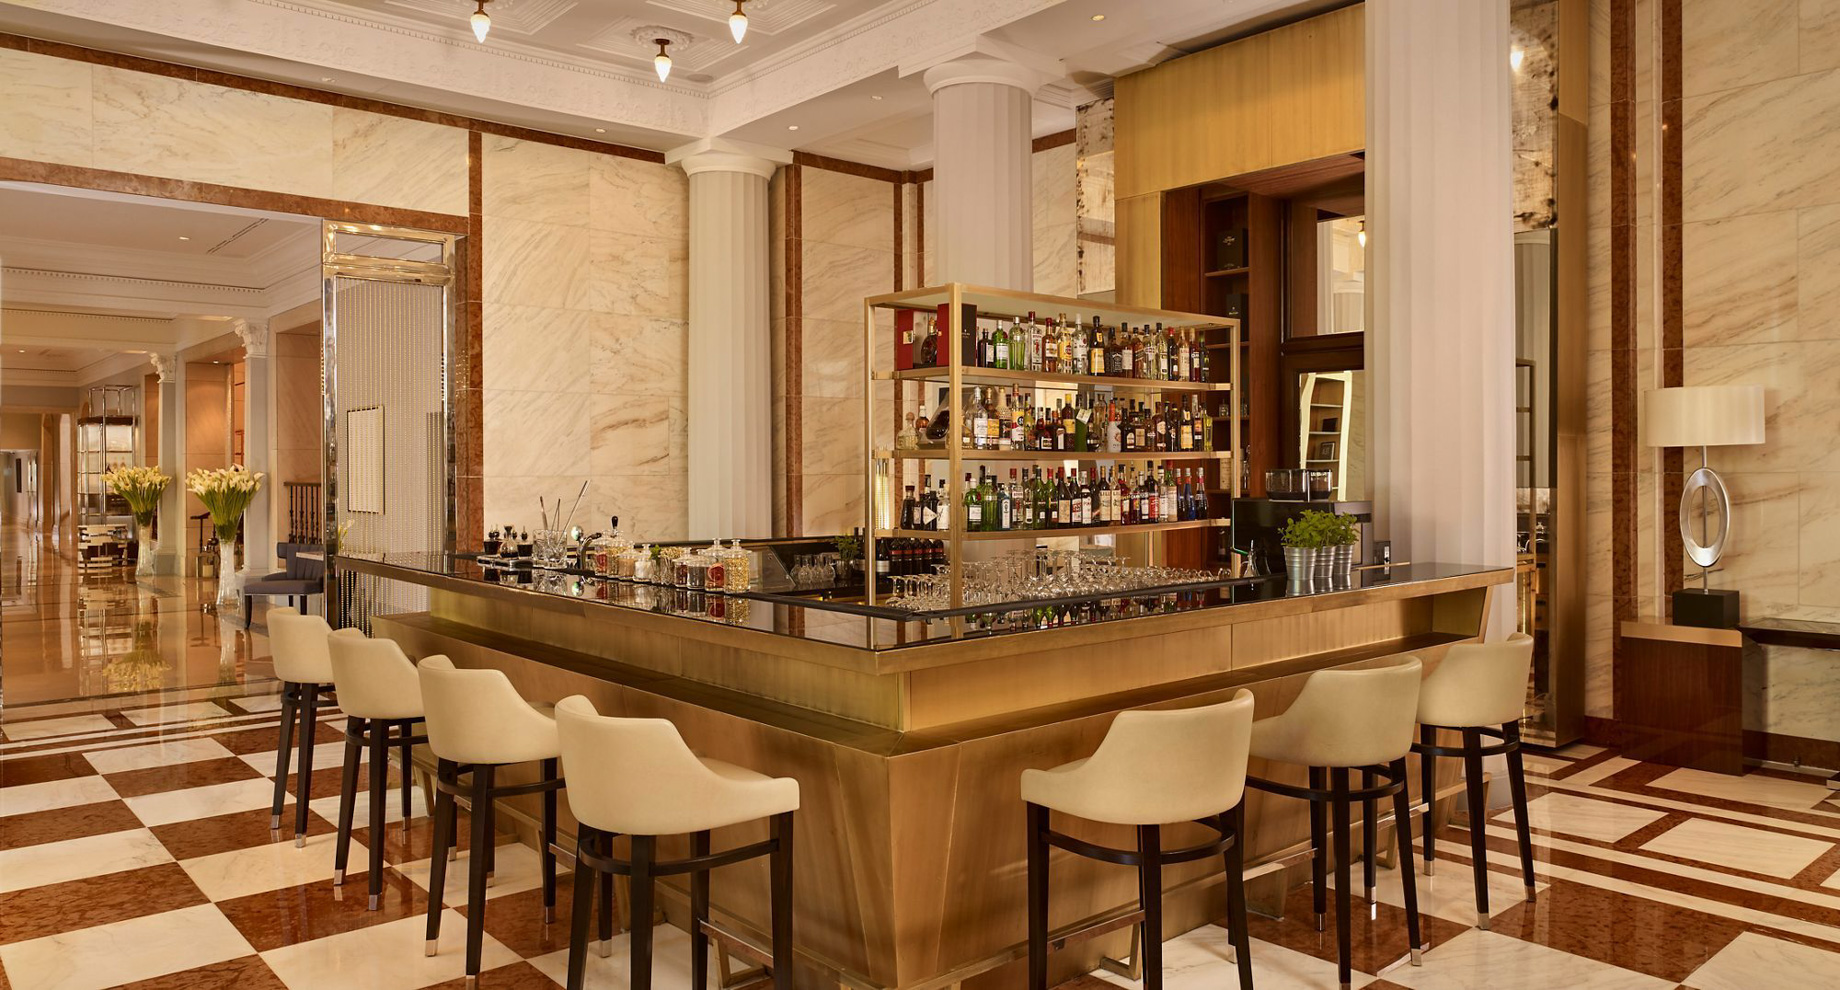 The Ritz-Carlton, Budapest Hotel – Budapest, Hungary – Kaffee Wein Bar